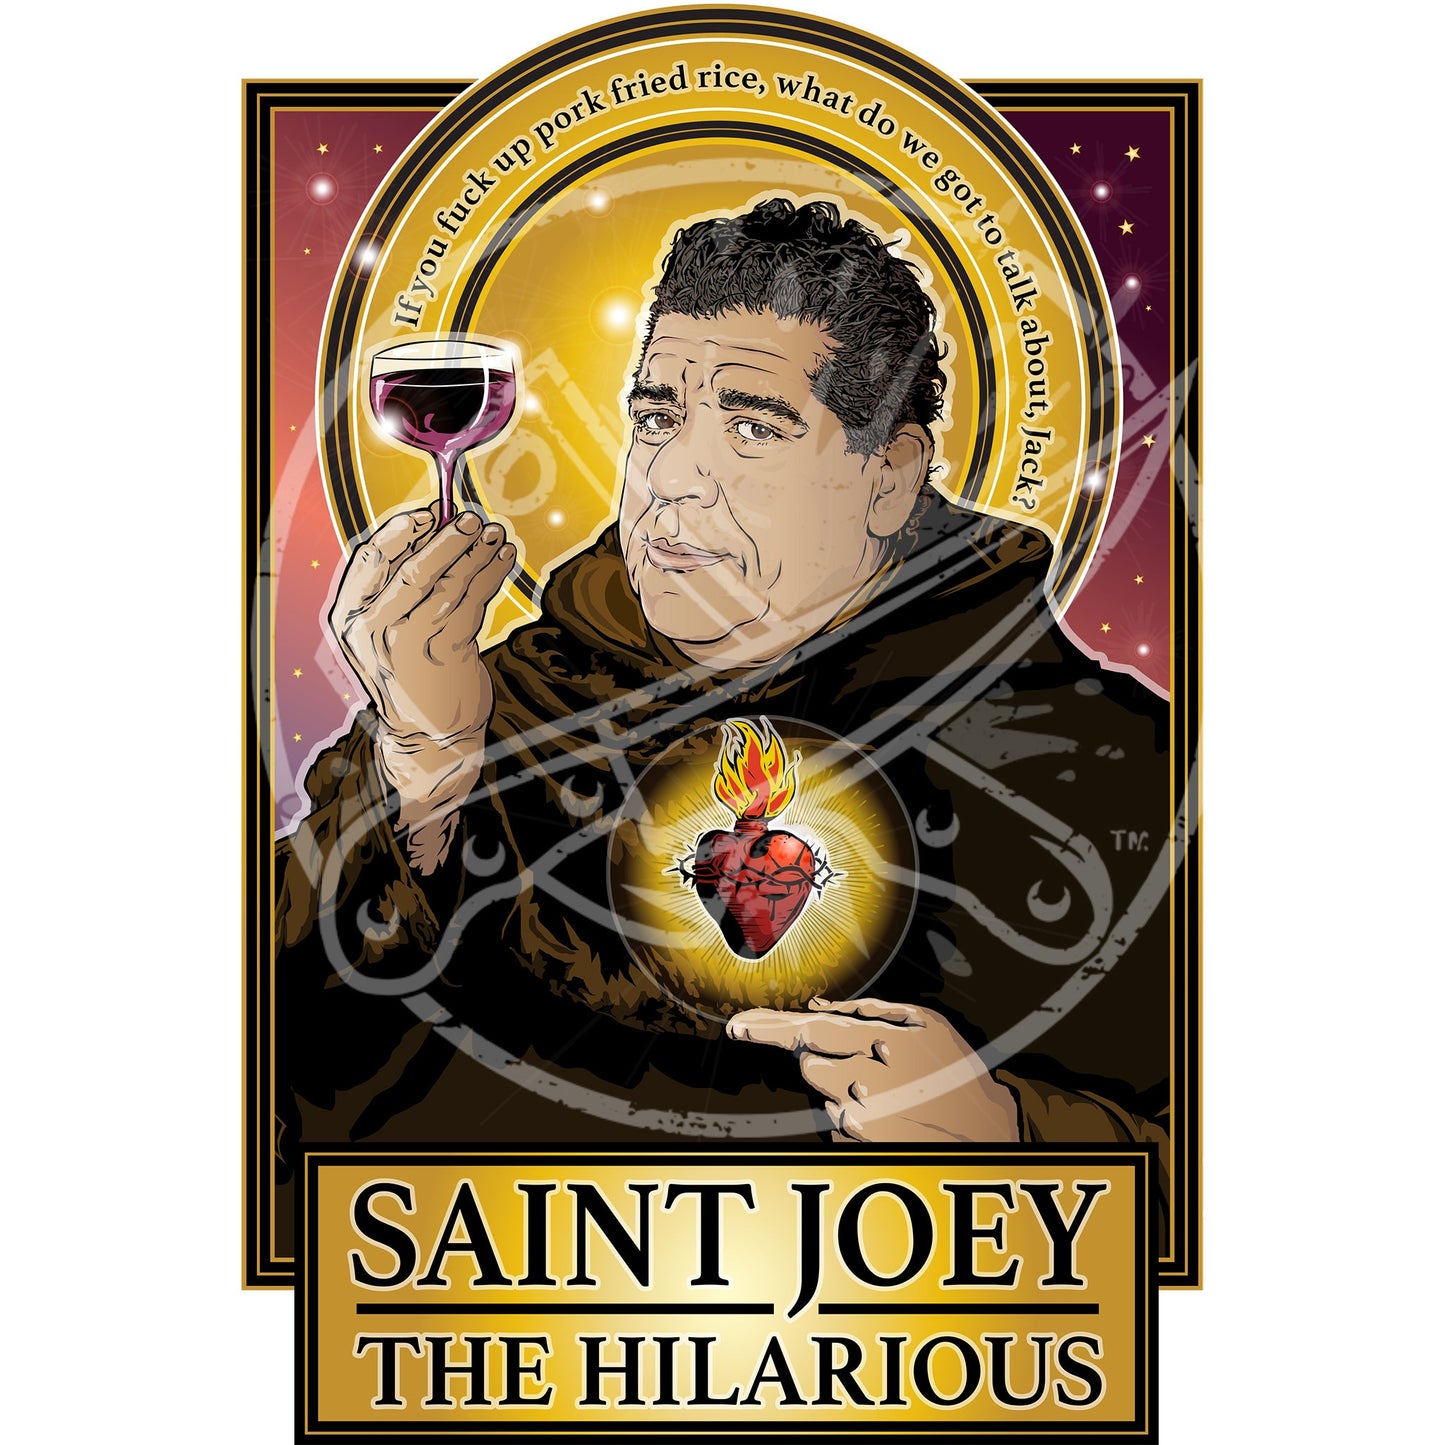 Saint Joey The Hilarious Poster Cleaverandblade.com